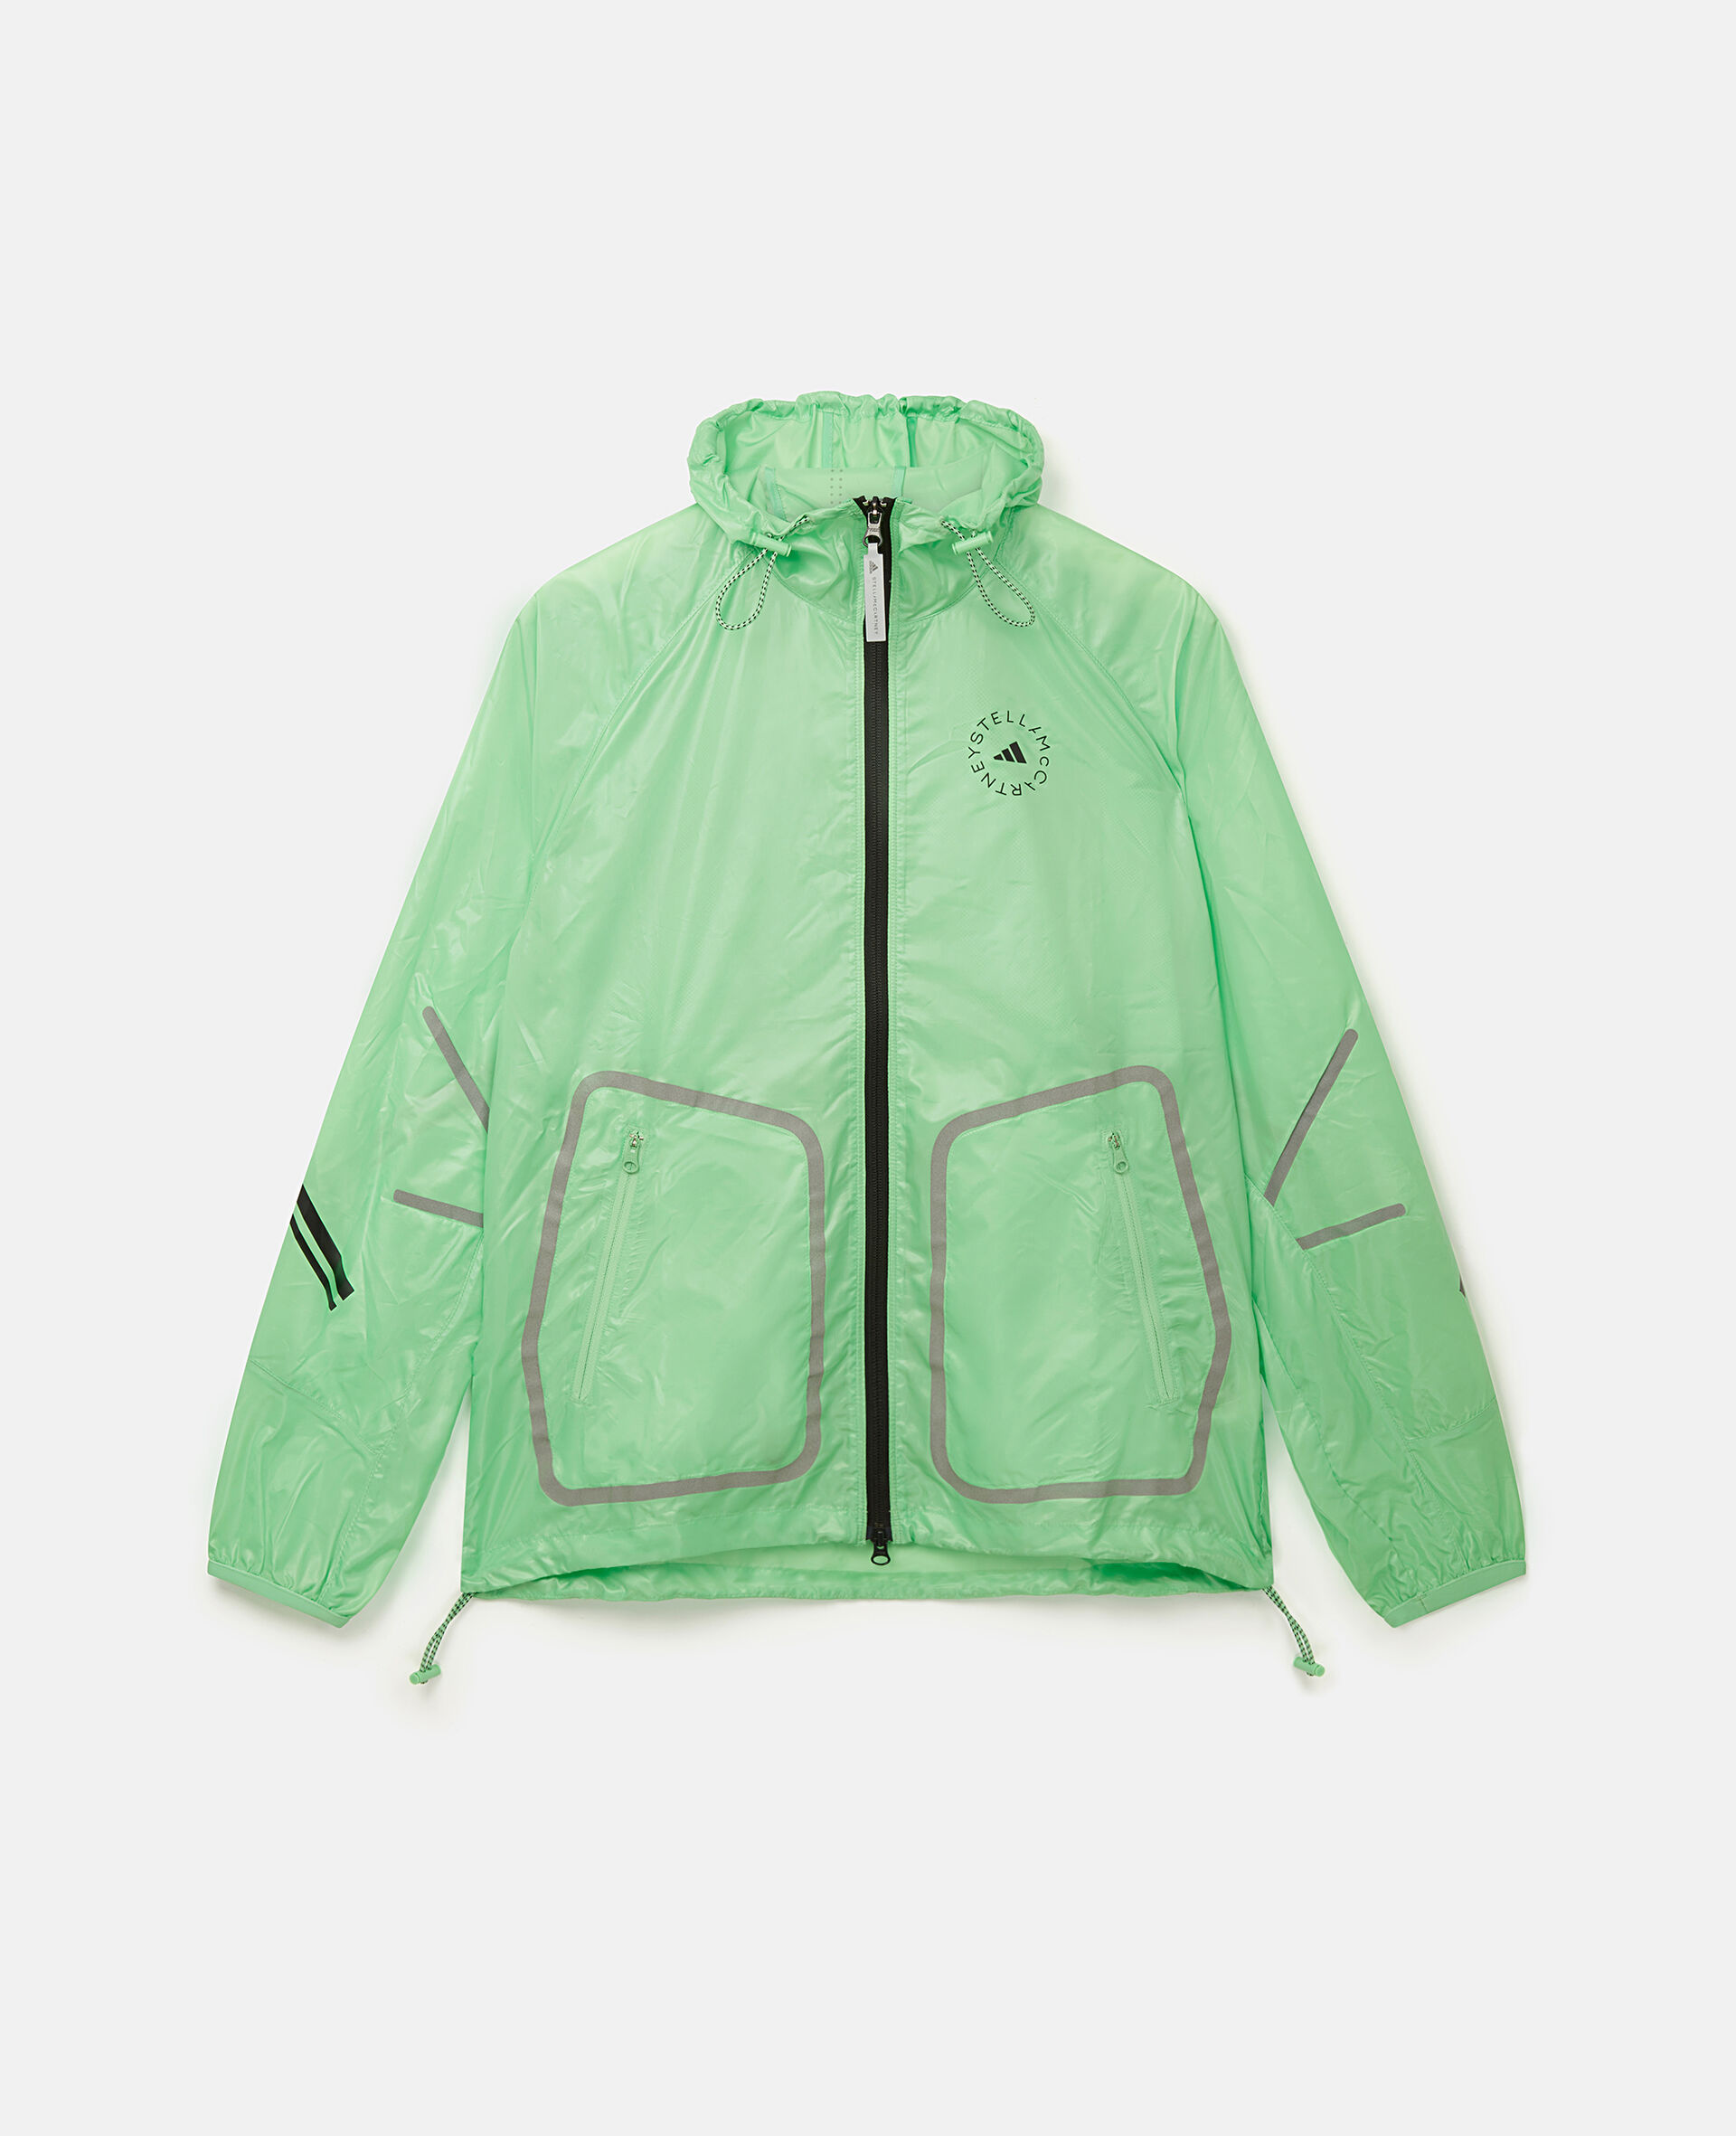 TruePace Reflective Running Jacket-Green-large image number 0